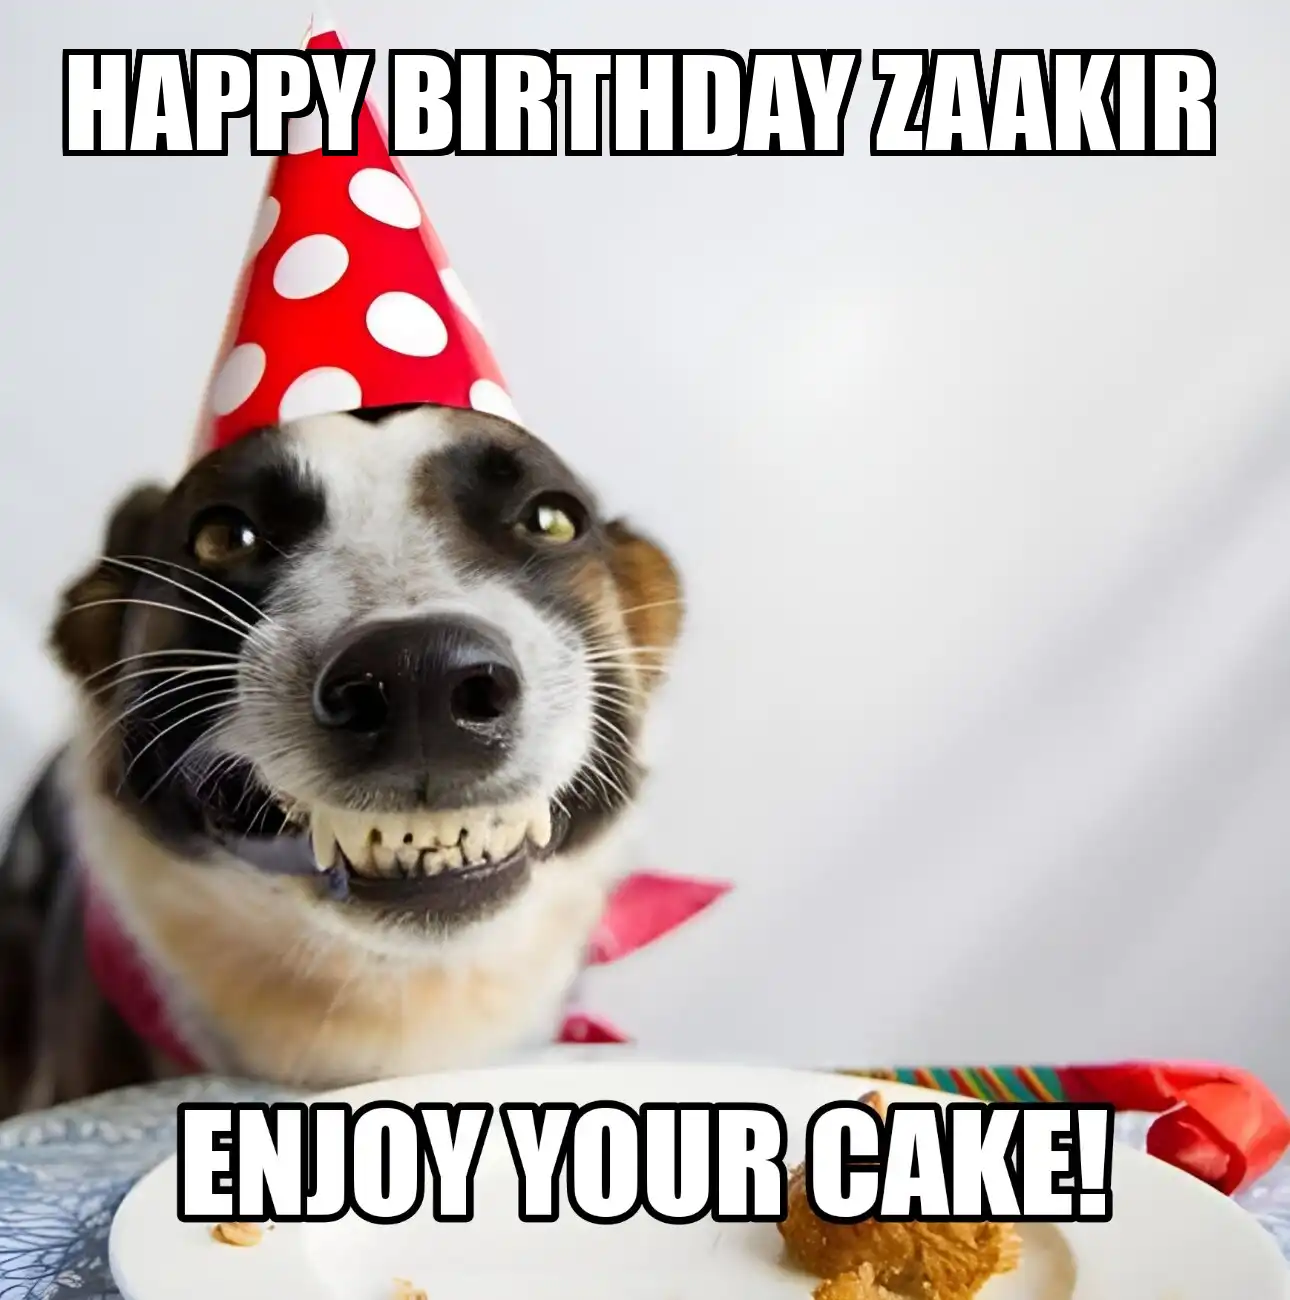 Happy Birthday Zaakir Enjoy Your Cake Dog Meme